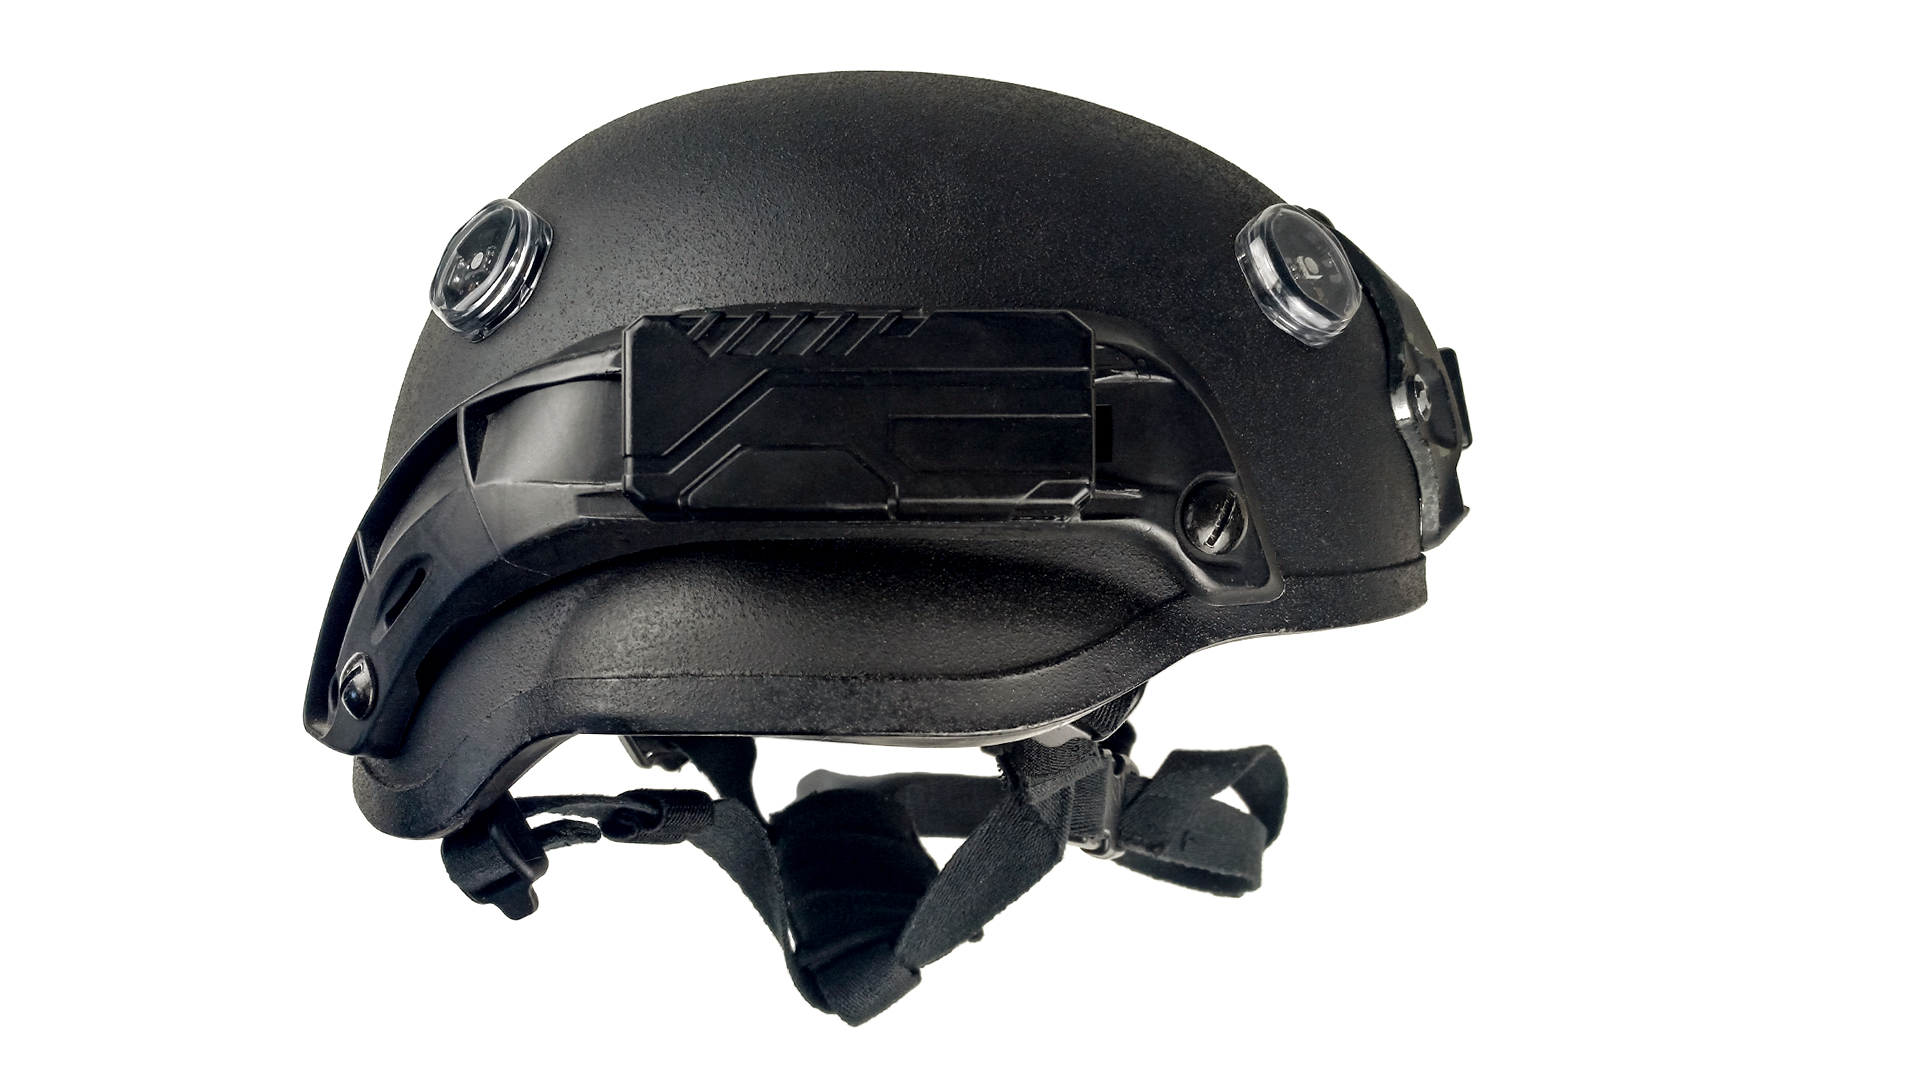 Alphatag tactical Ops-Core helmet photo 4